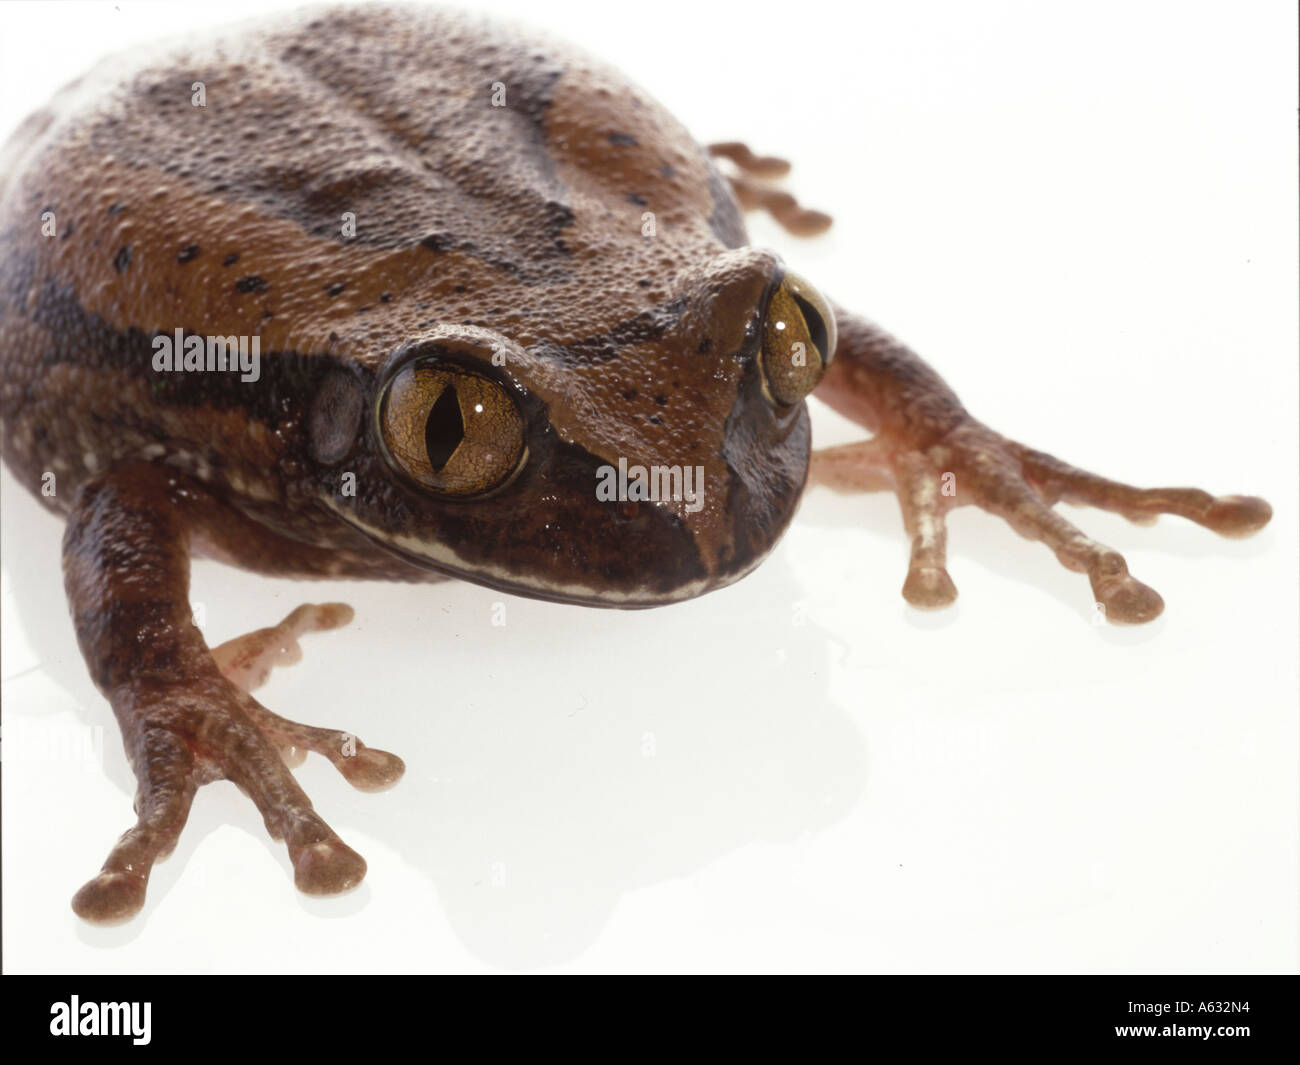 Close-up of tree frog on white background Stock Photo